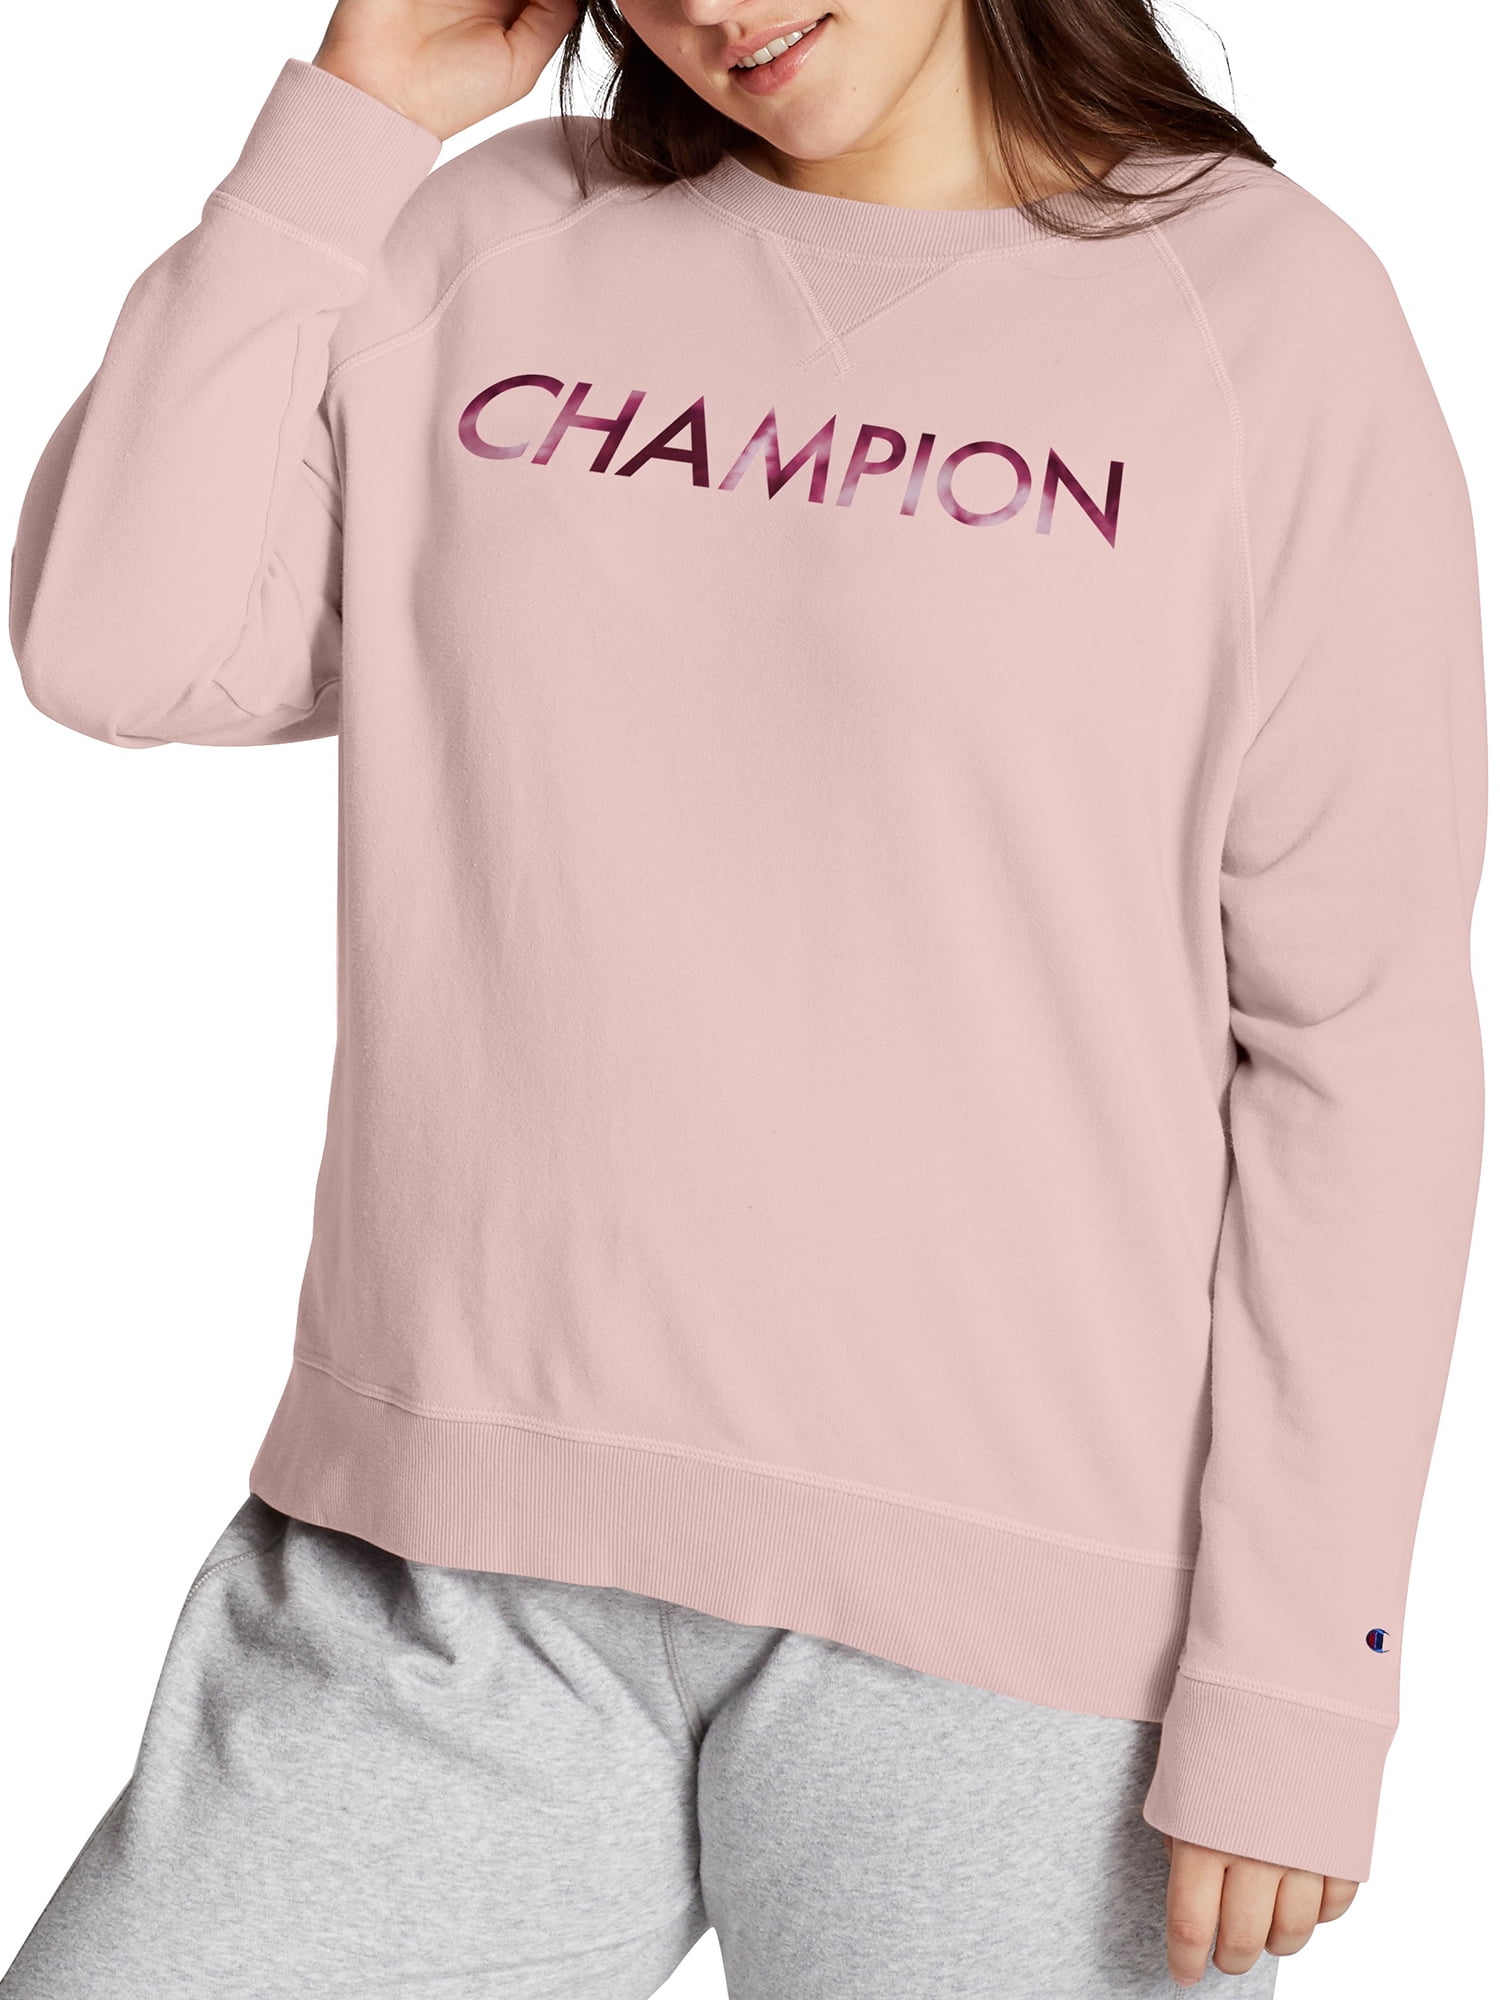 Champion Women's Plus Size French Terry Logo Print Crewneck Sweatshirt Walmart.com